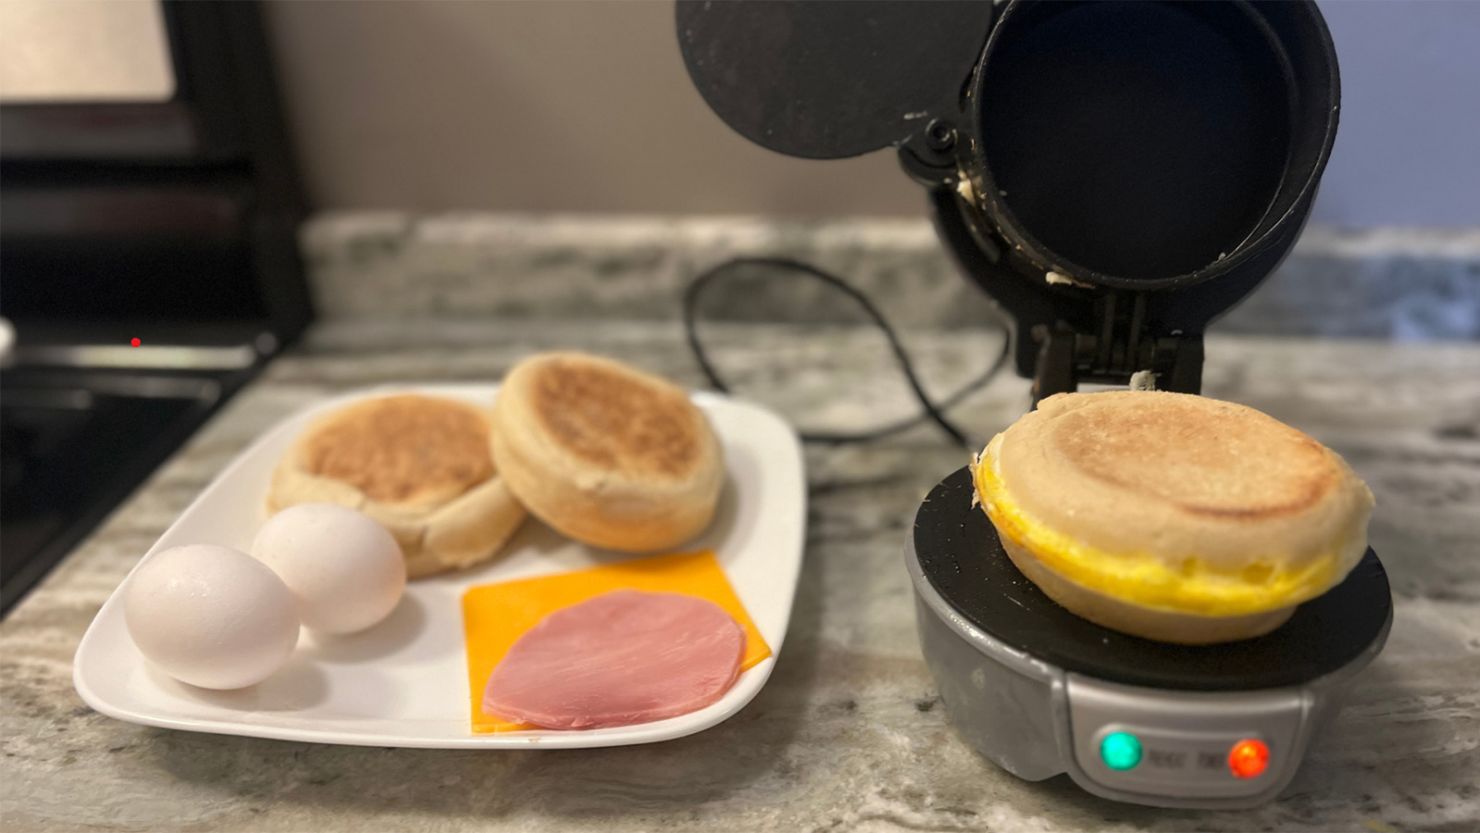 Hamilton Beach Breakfast Sandwich Maker review